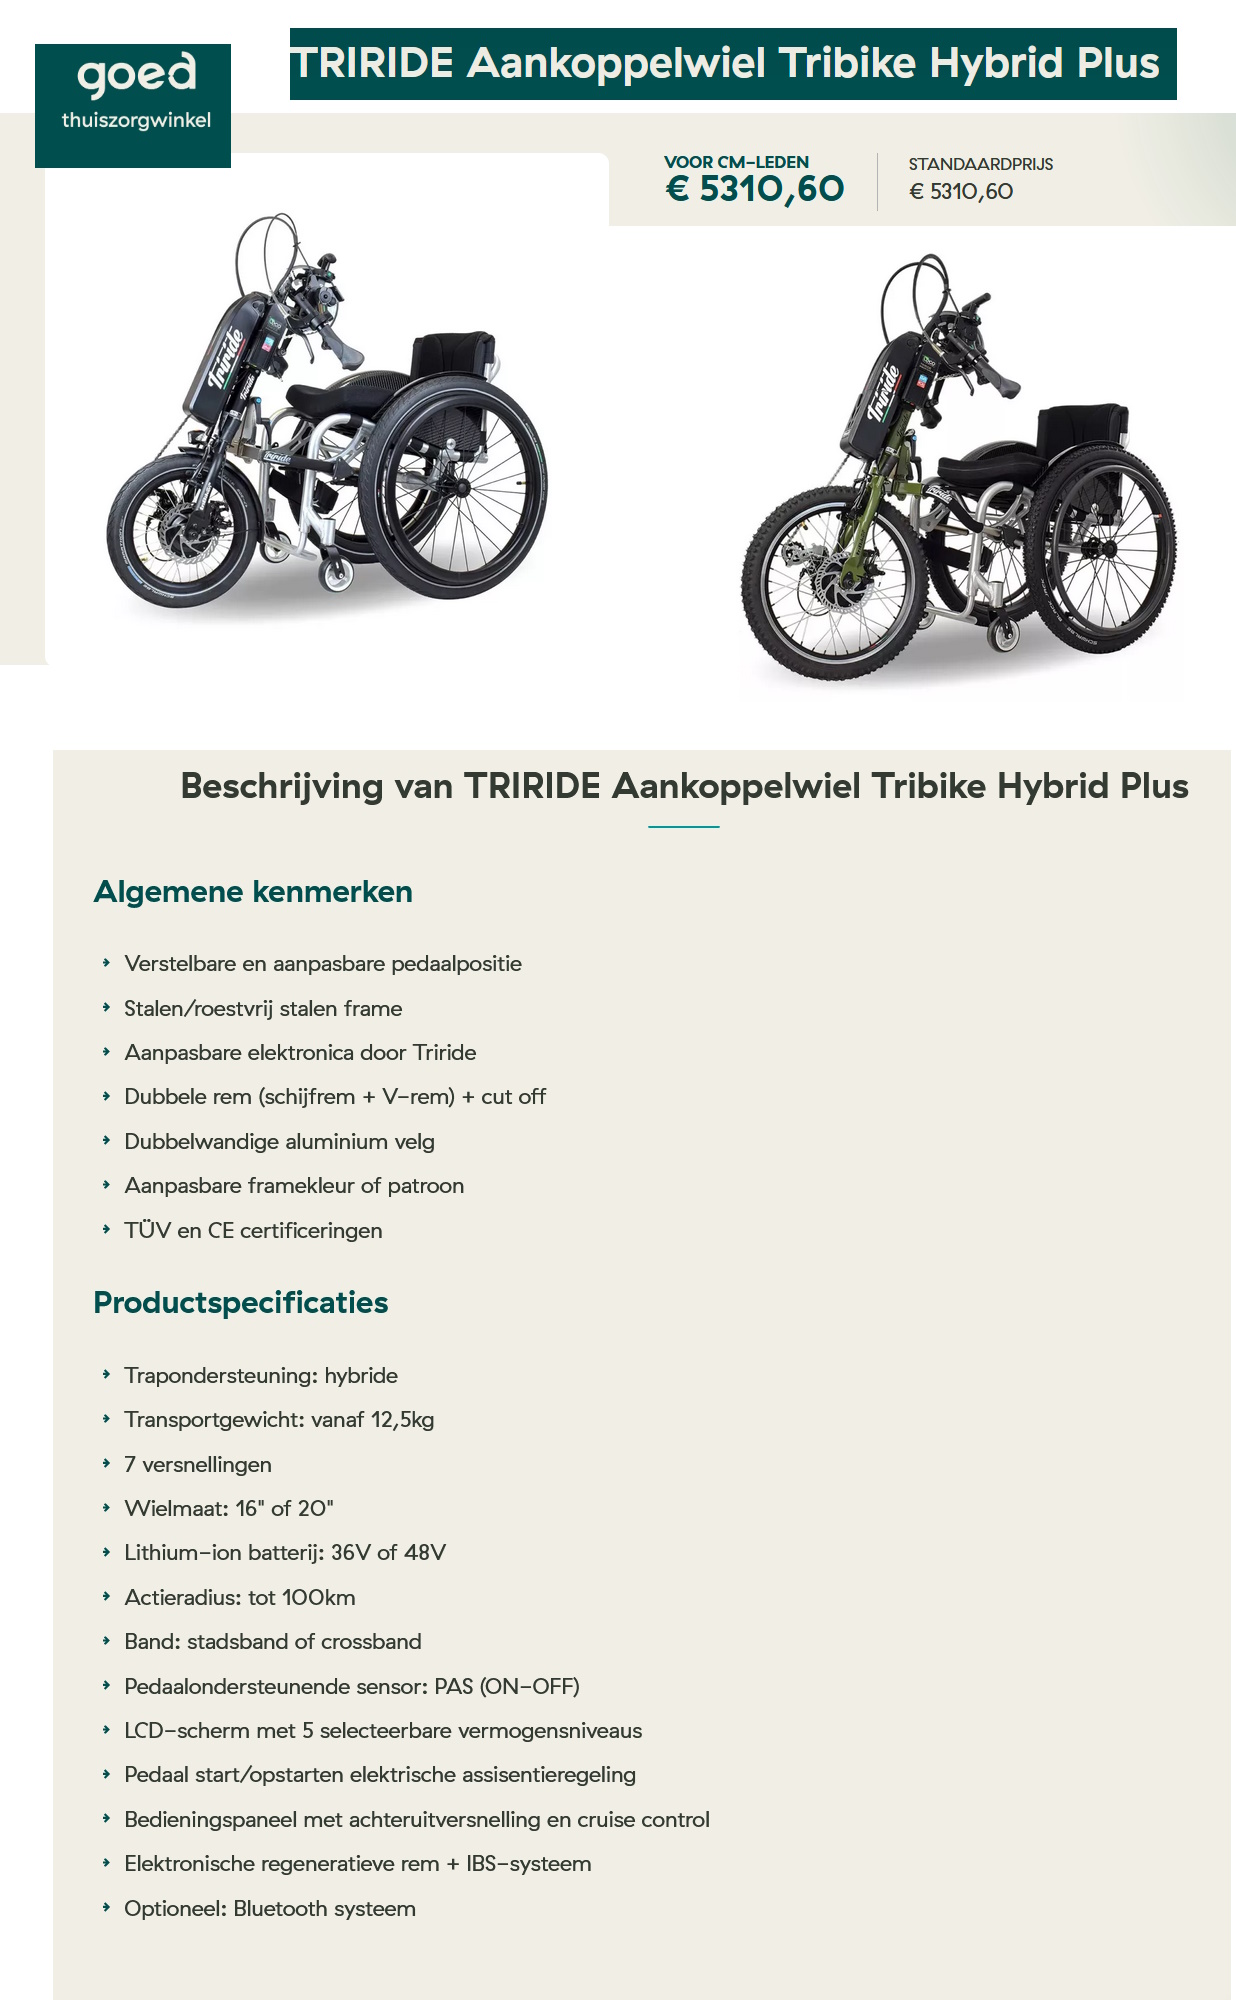 toegevoegd document 2 van Aankoppelwiel Tribike Hybrid Plus  